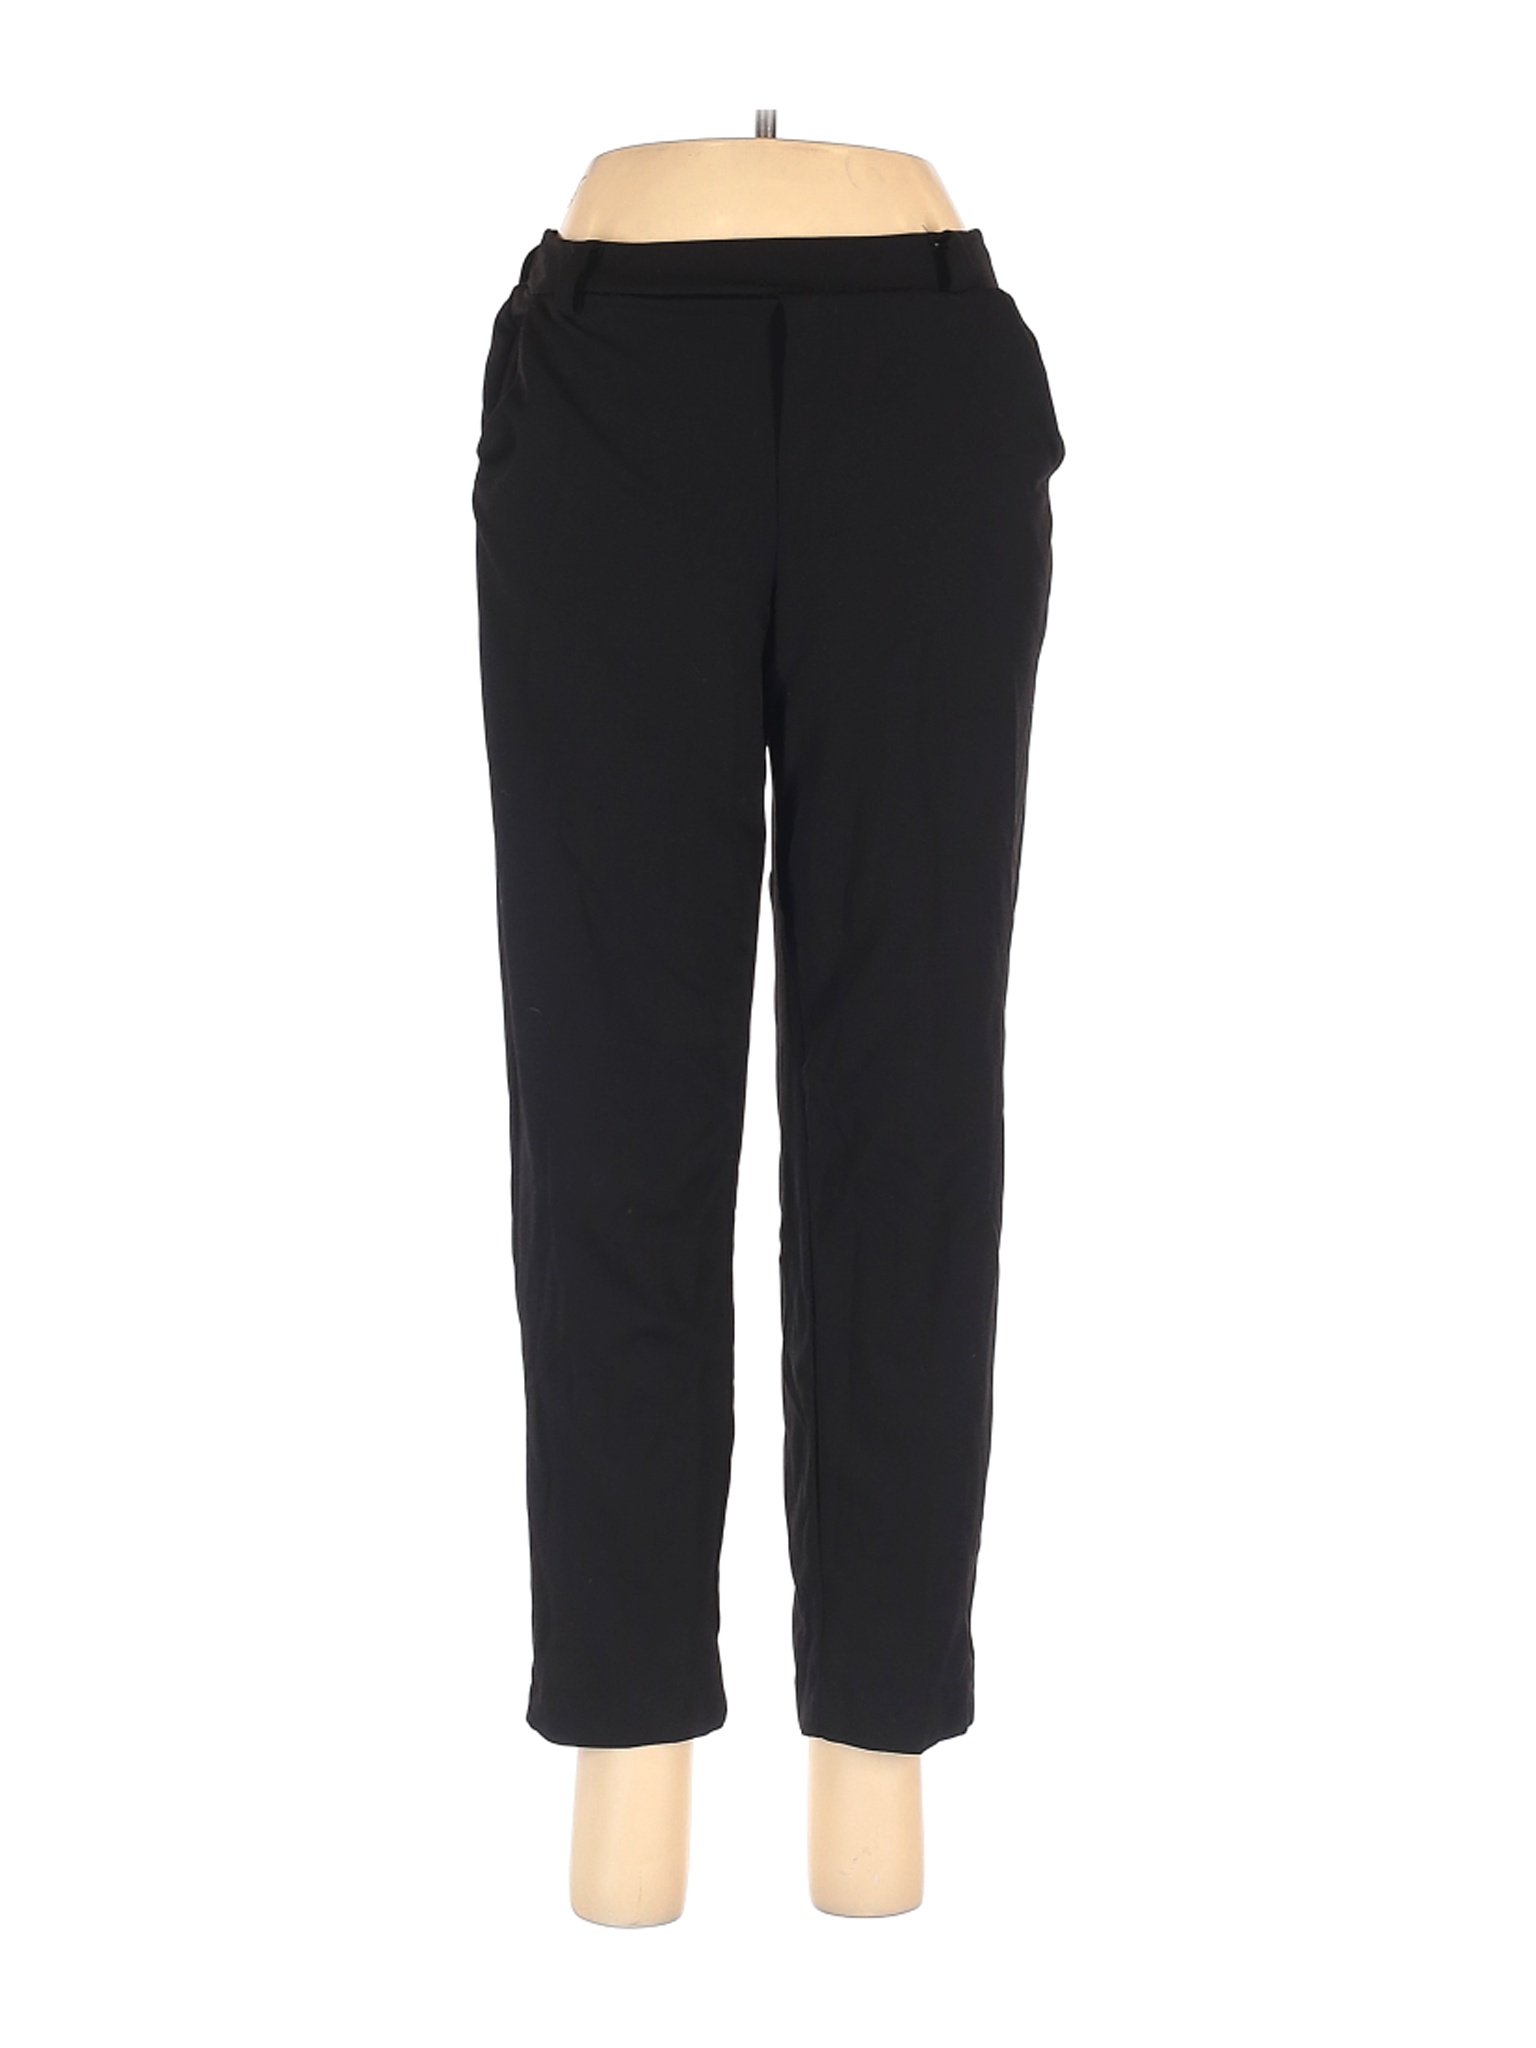 BBJ Los Angeles Women Black Dress Pants M | eBay